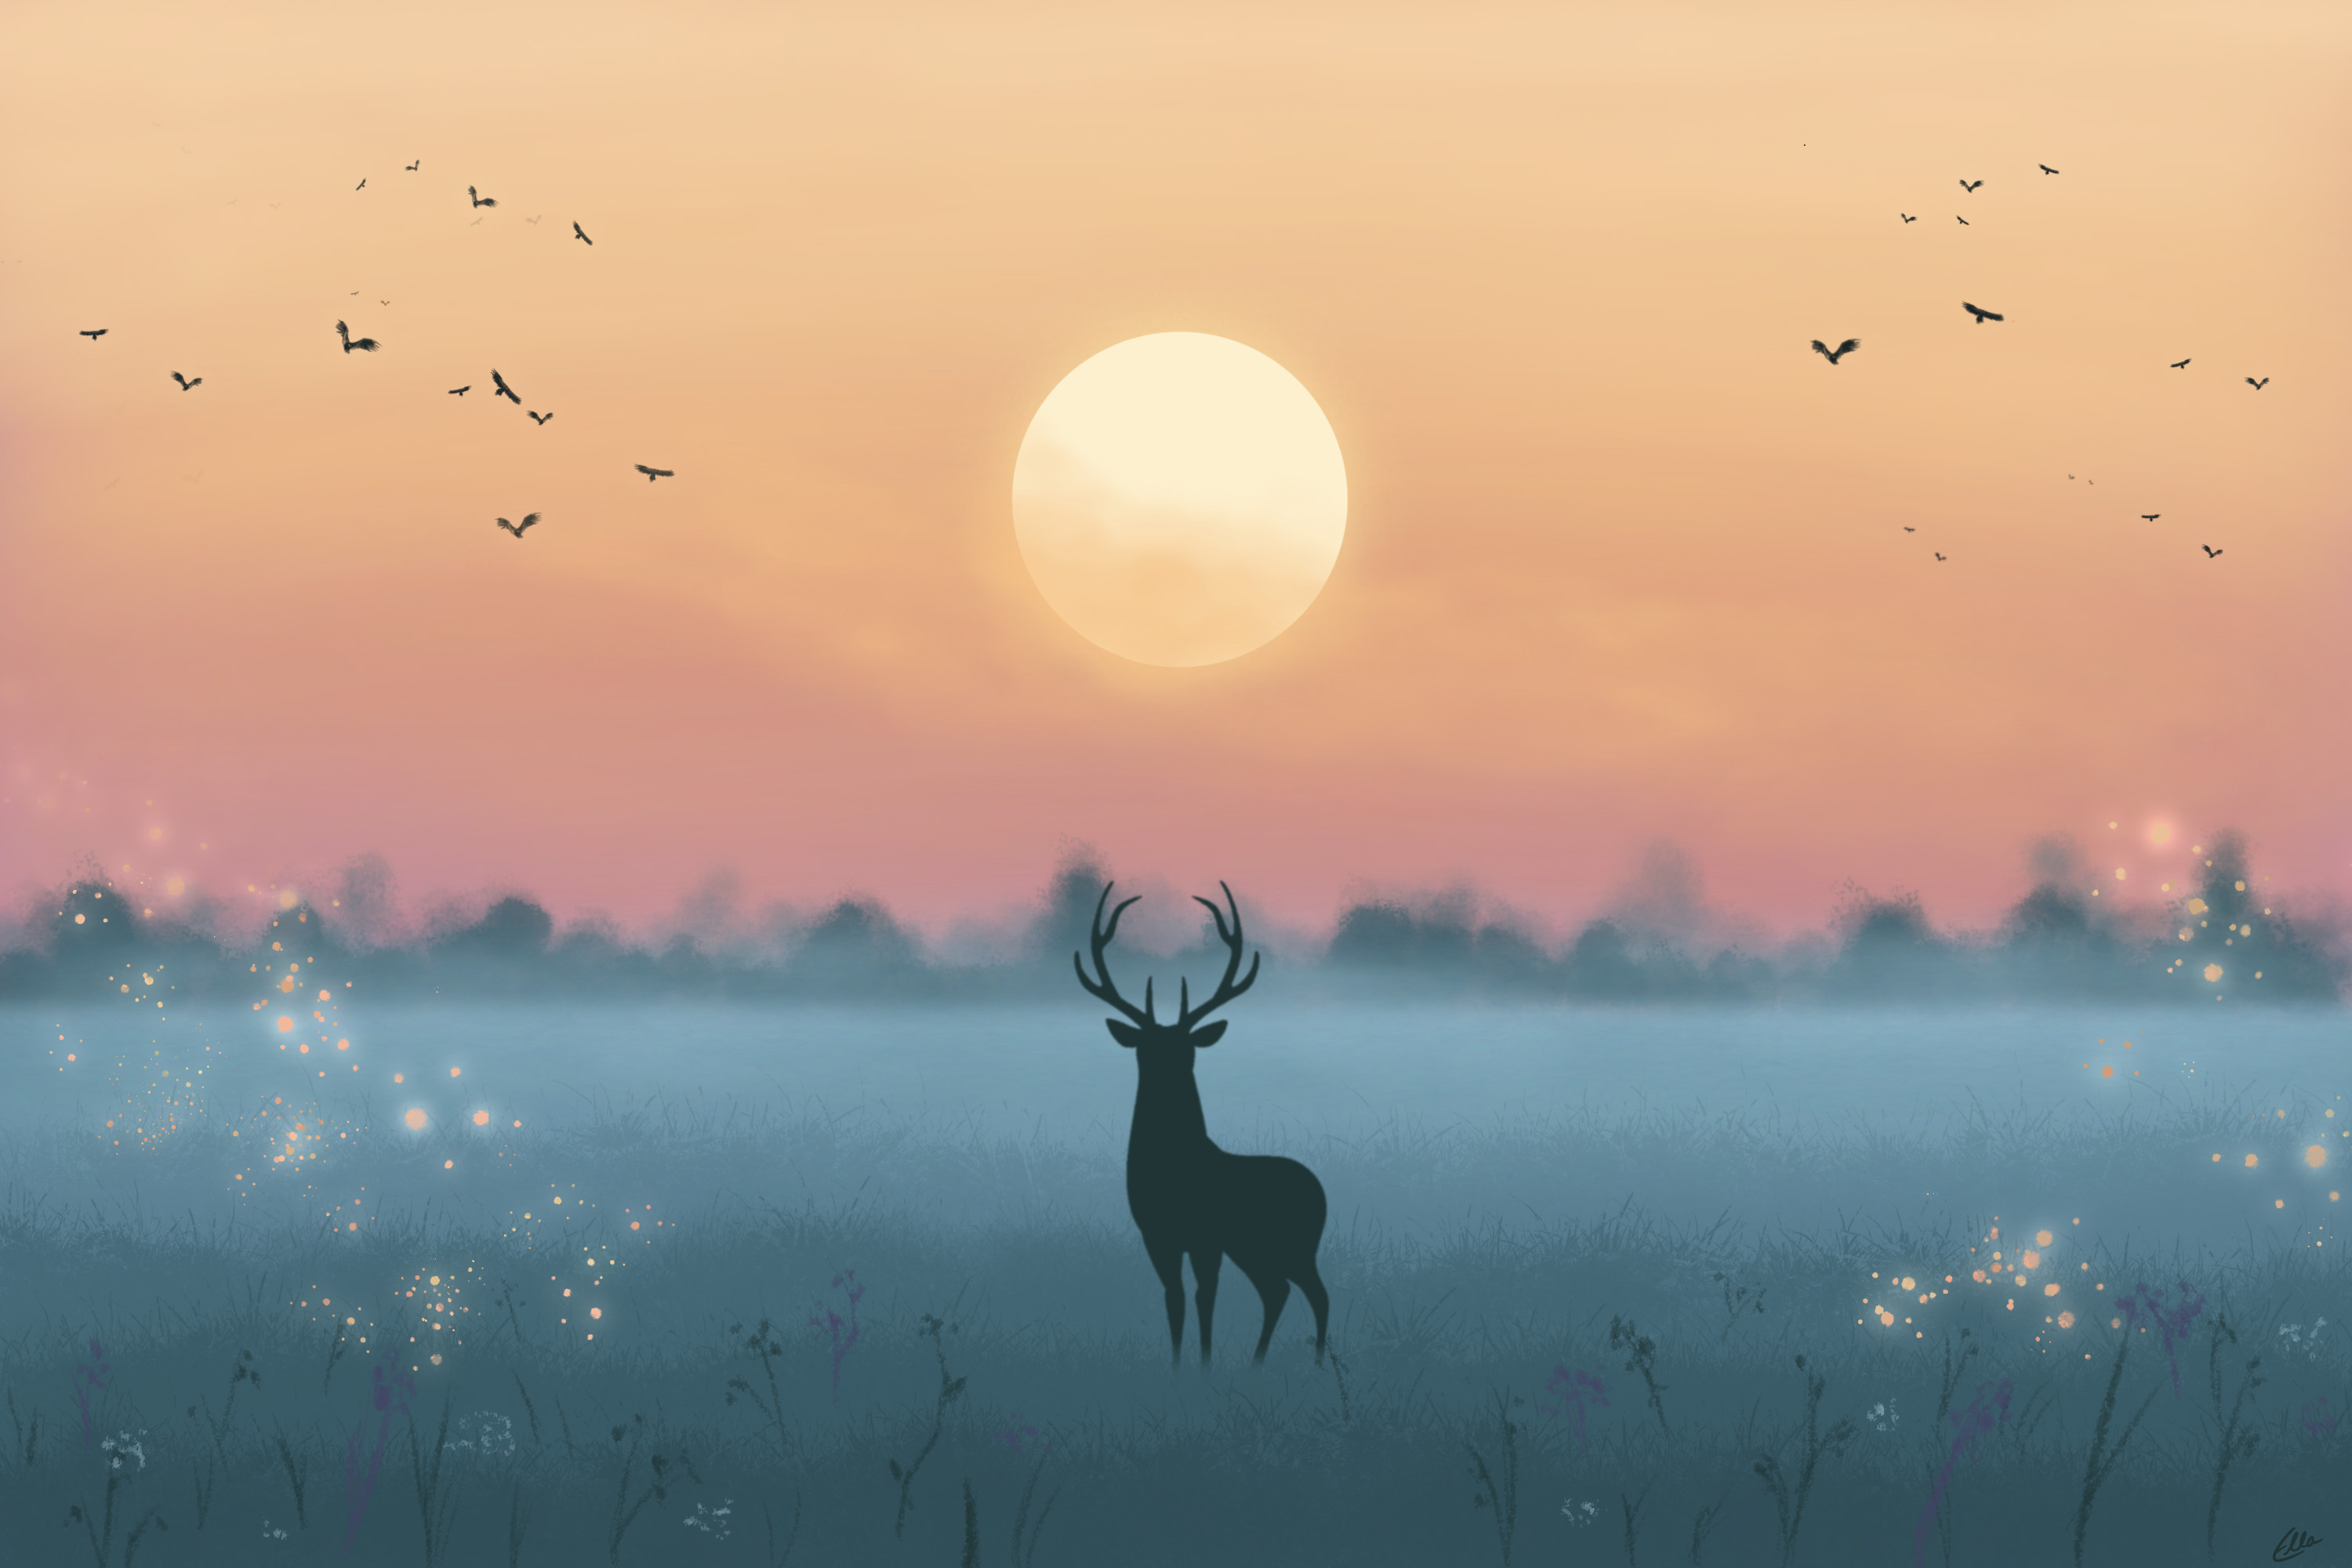 Deer Staring At Sunset Anime
 Wallpapers